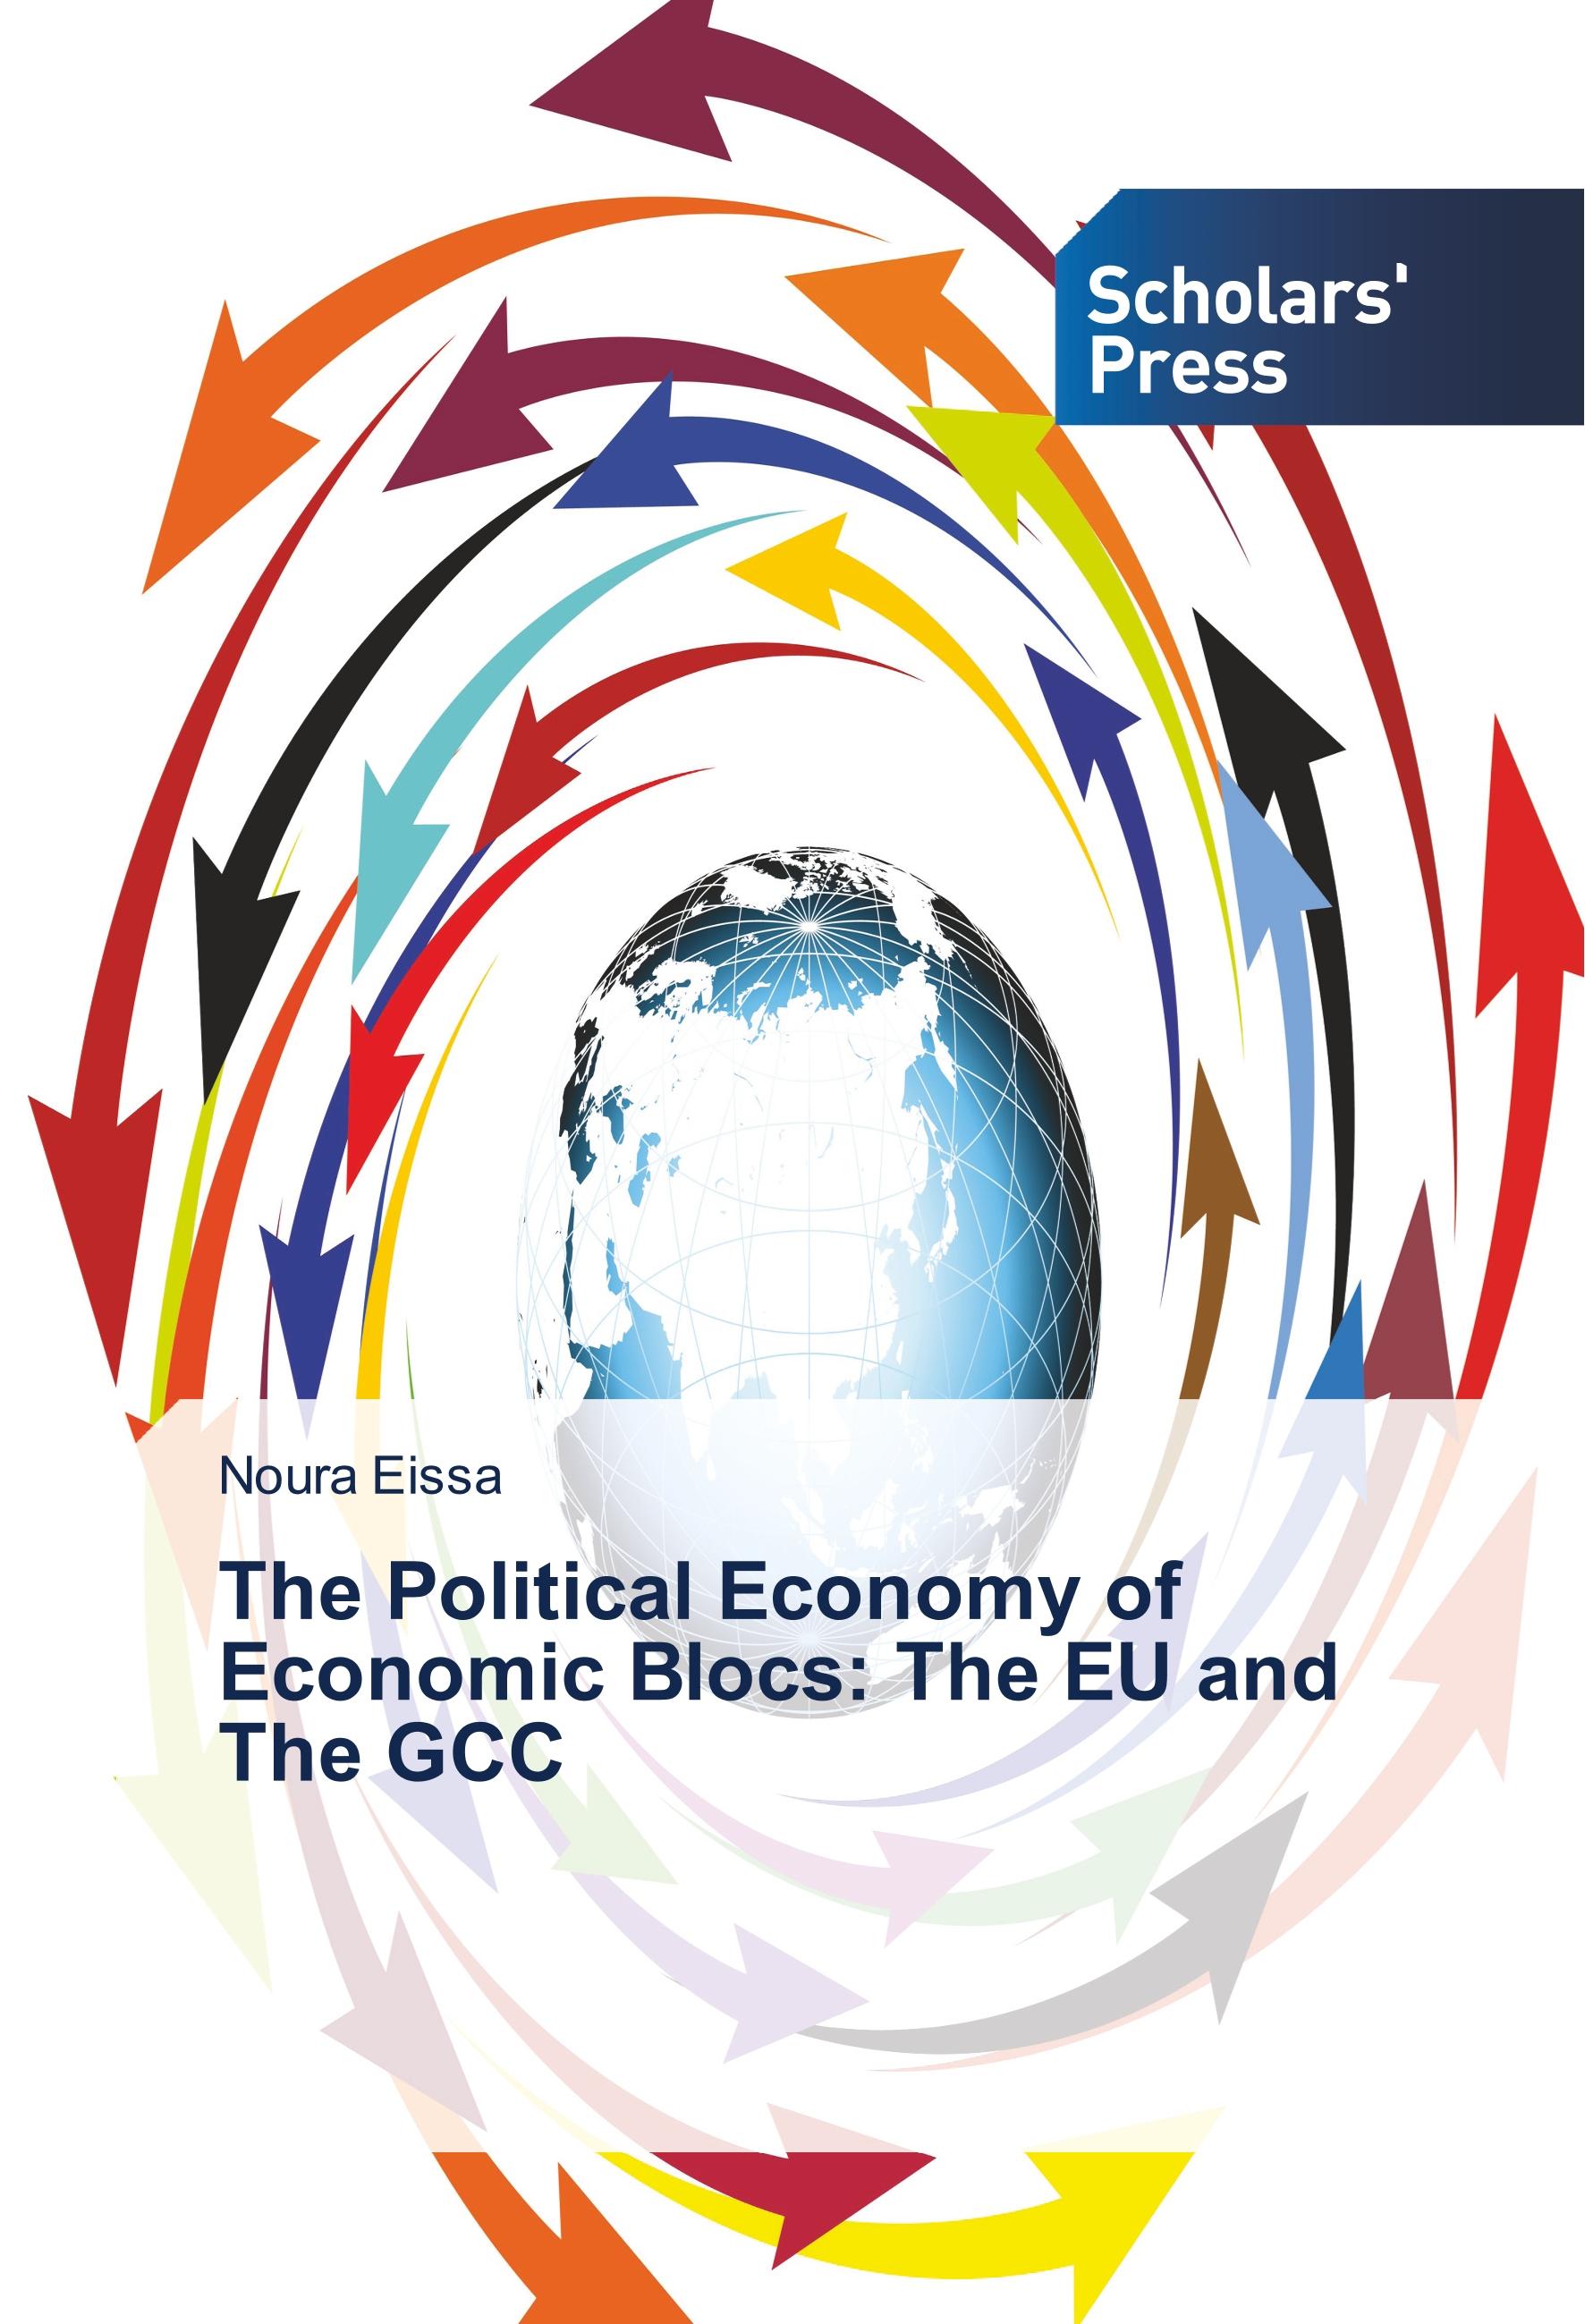 The Political Economy of Economic Blocs: The EU and The GCC - Eissa, Noura